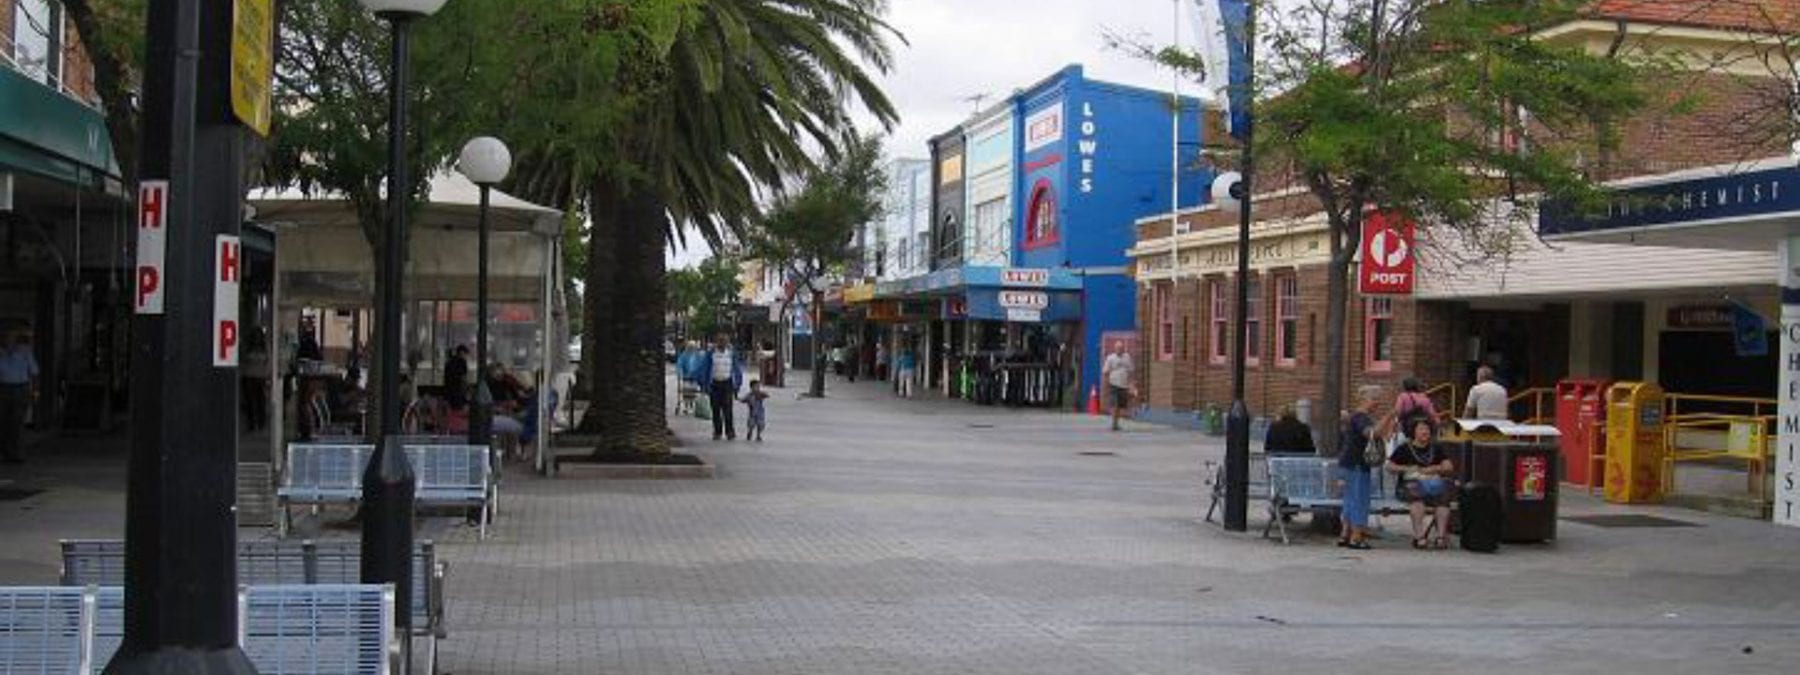 Caringbah street view